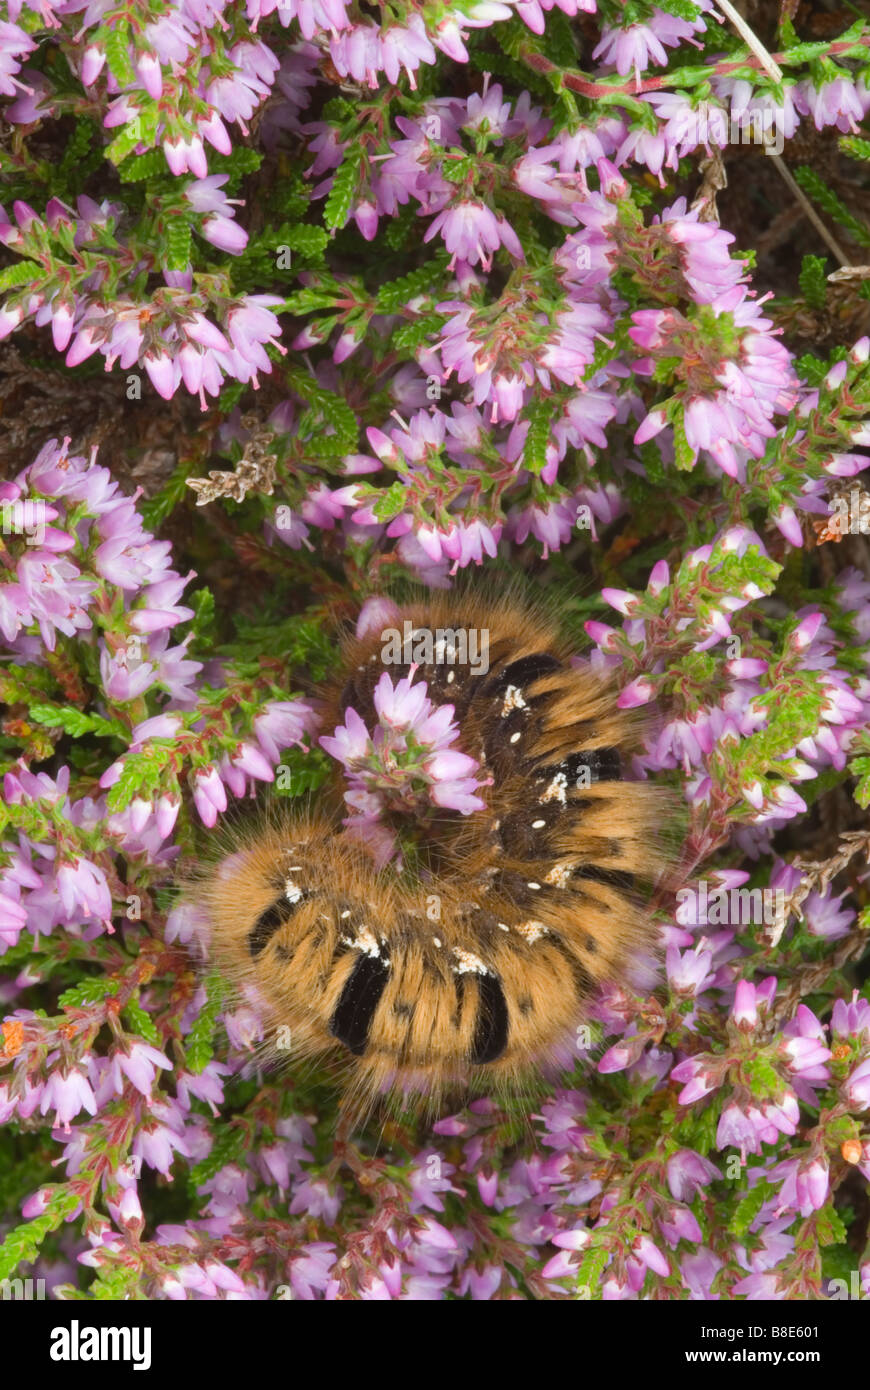 Larva caterpillar of Northern Egger Moth Lasiocampa quercus callunae on Heather Ling calluna vulgaris larval foodplant Scotland Stock Photo